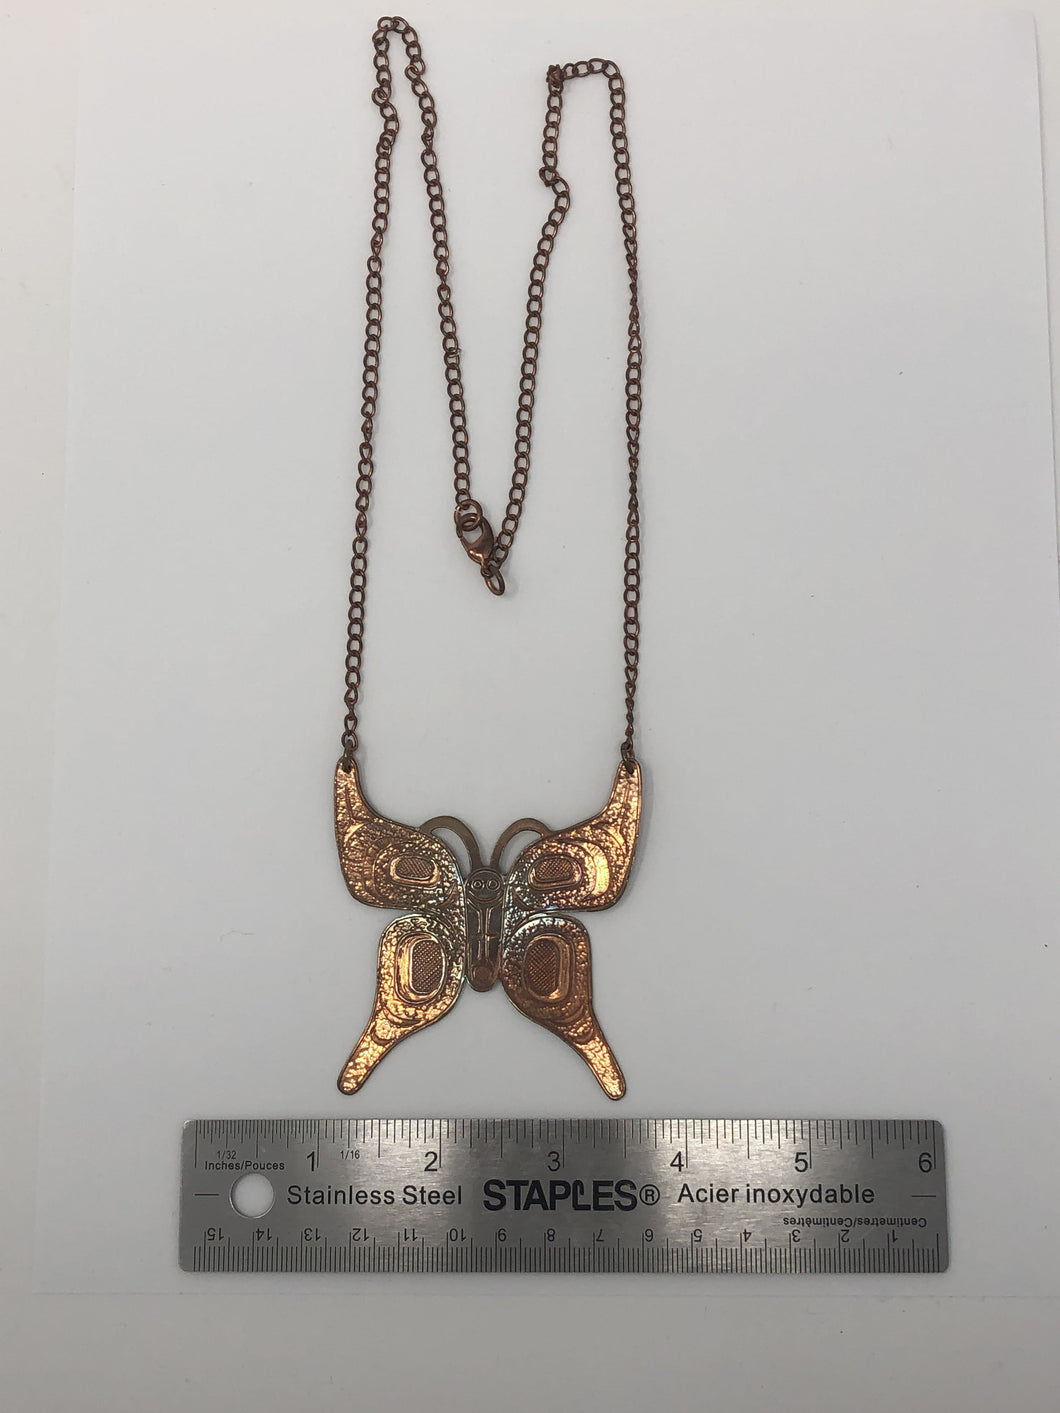 Butterfly Necklace by Stephen Bruce Sr